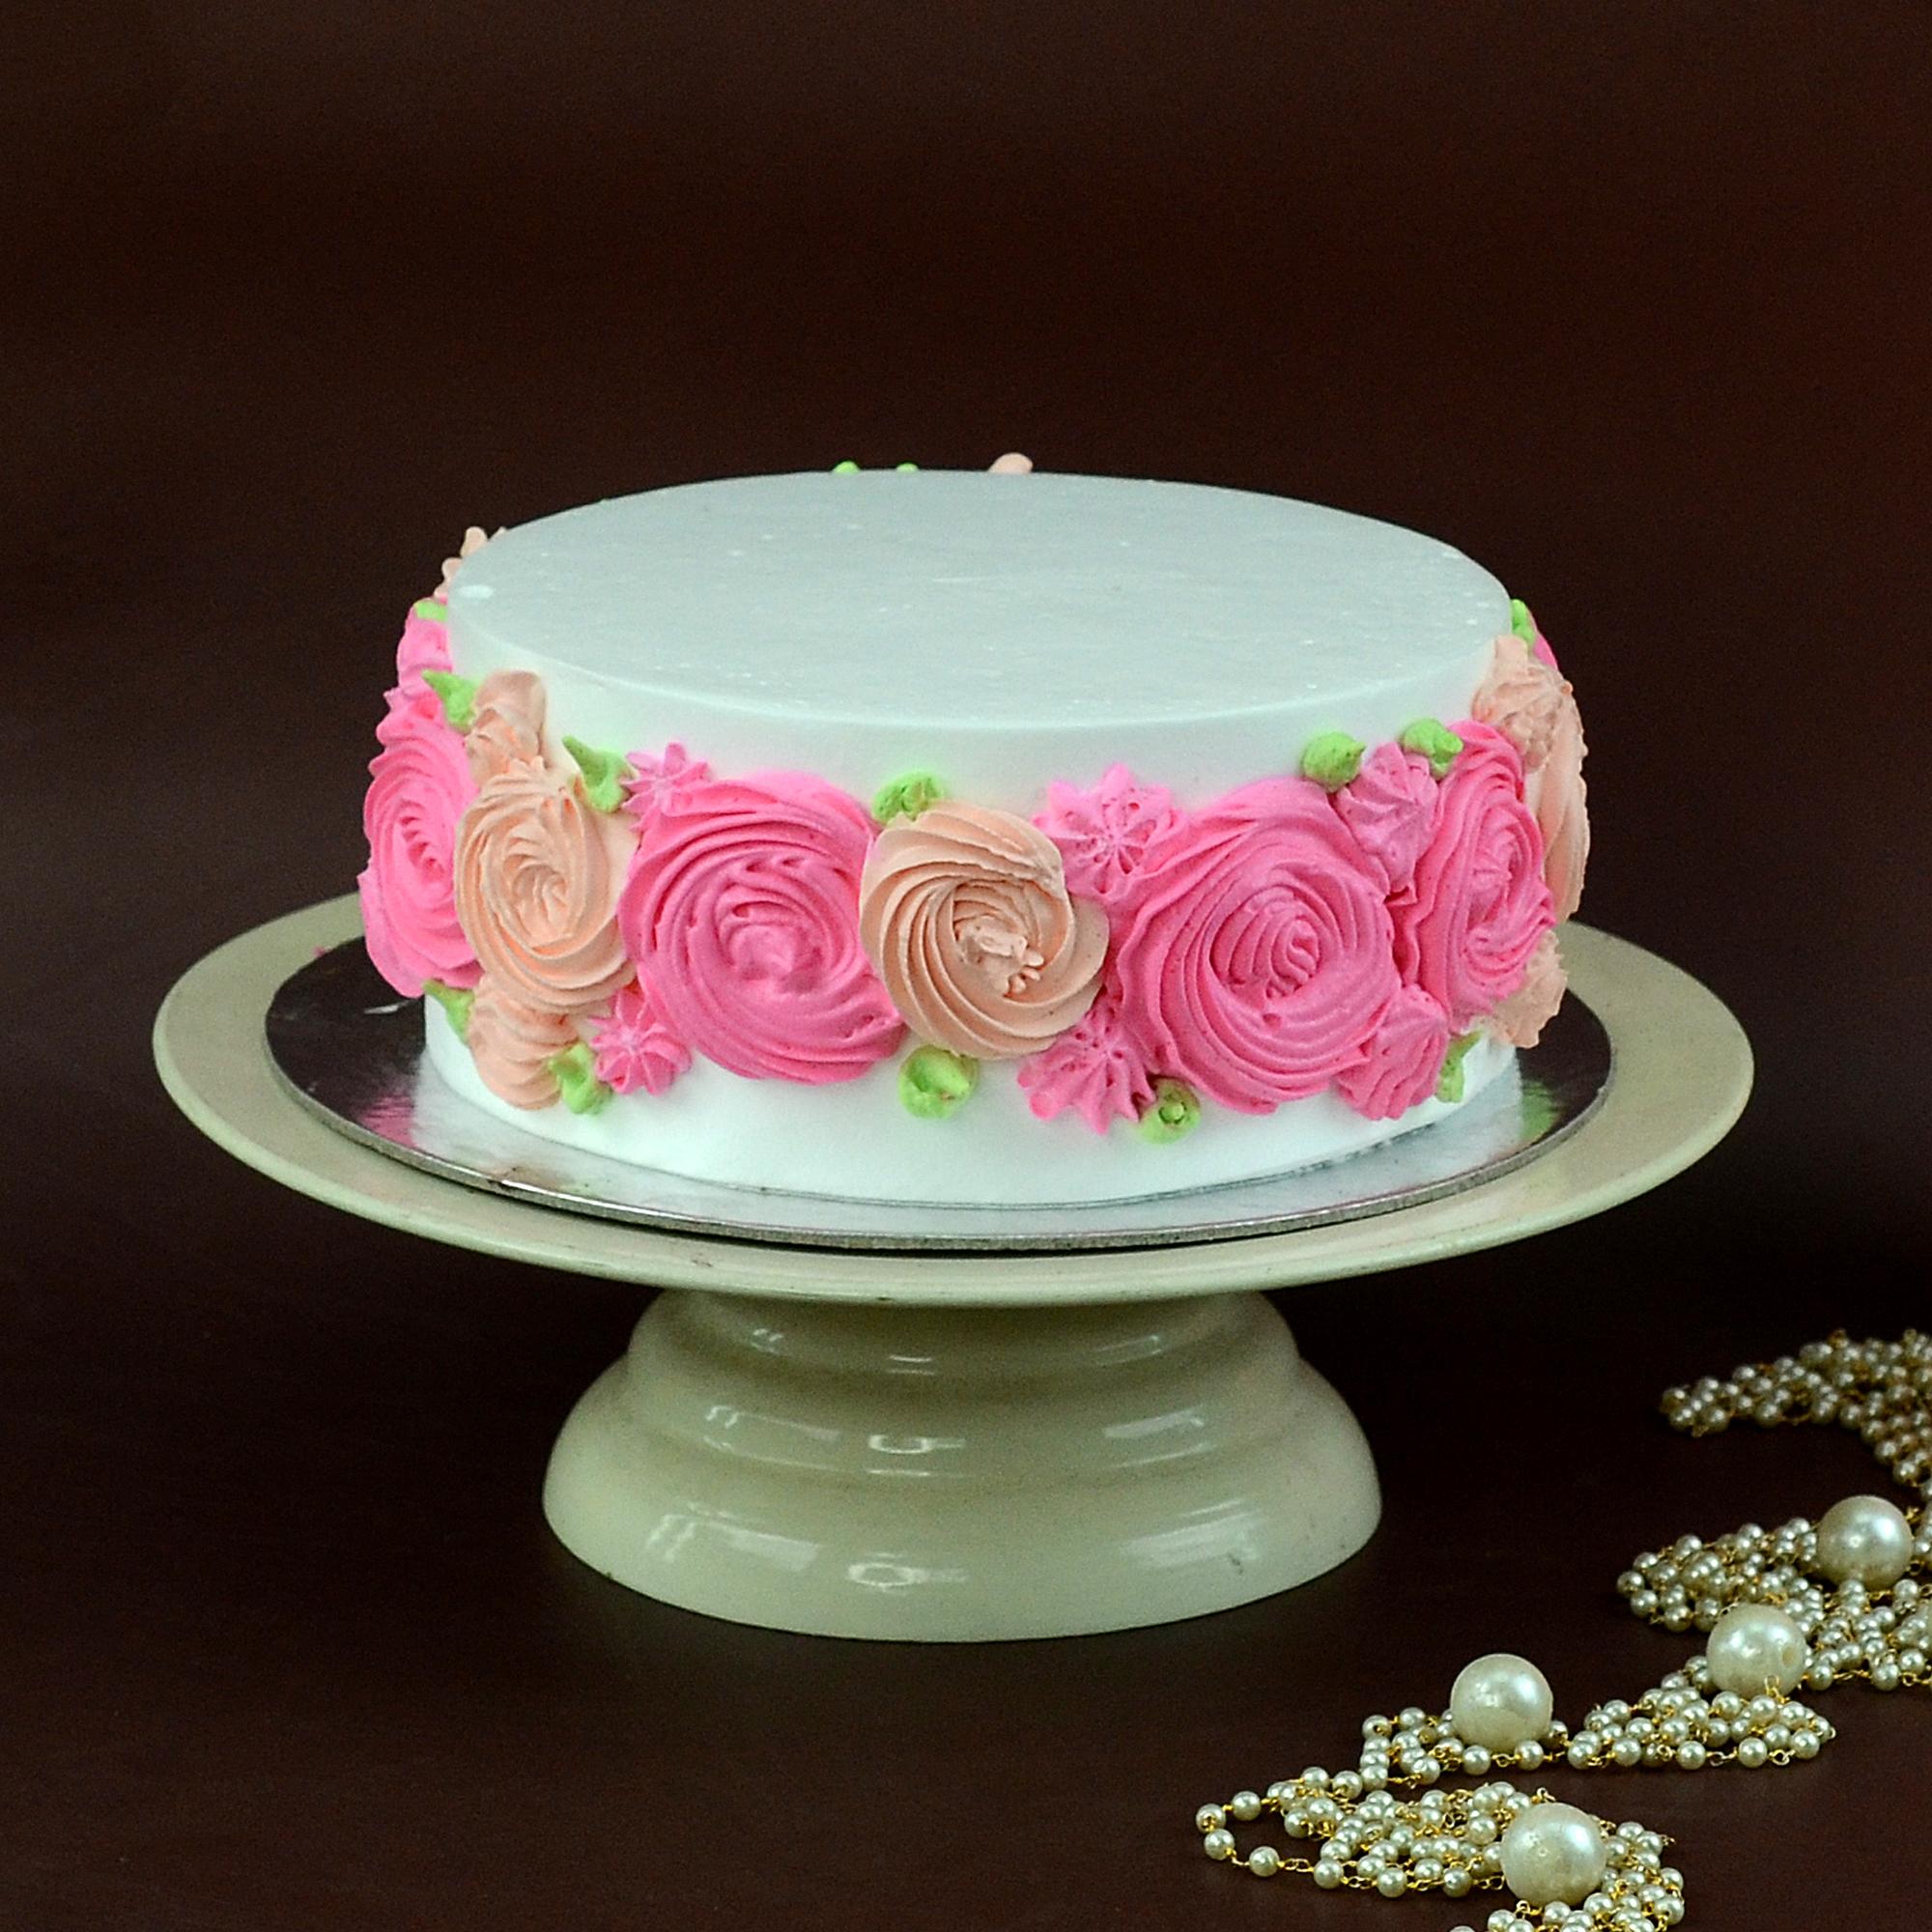 Order Half Birthday Cake Online | Fresh Cakes Made Daily on Order